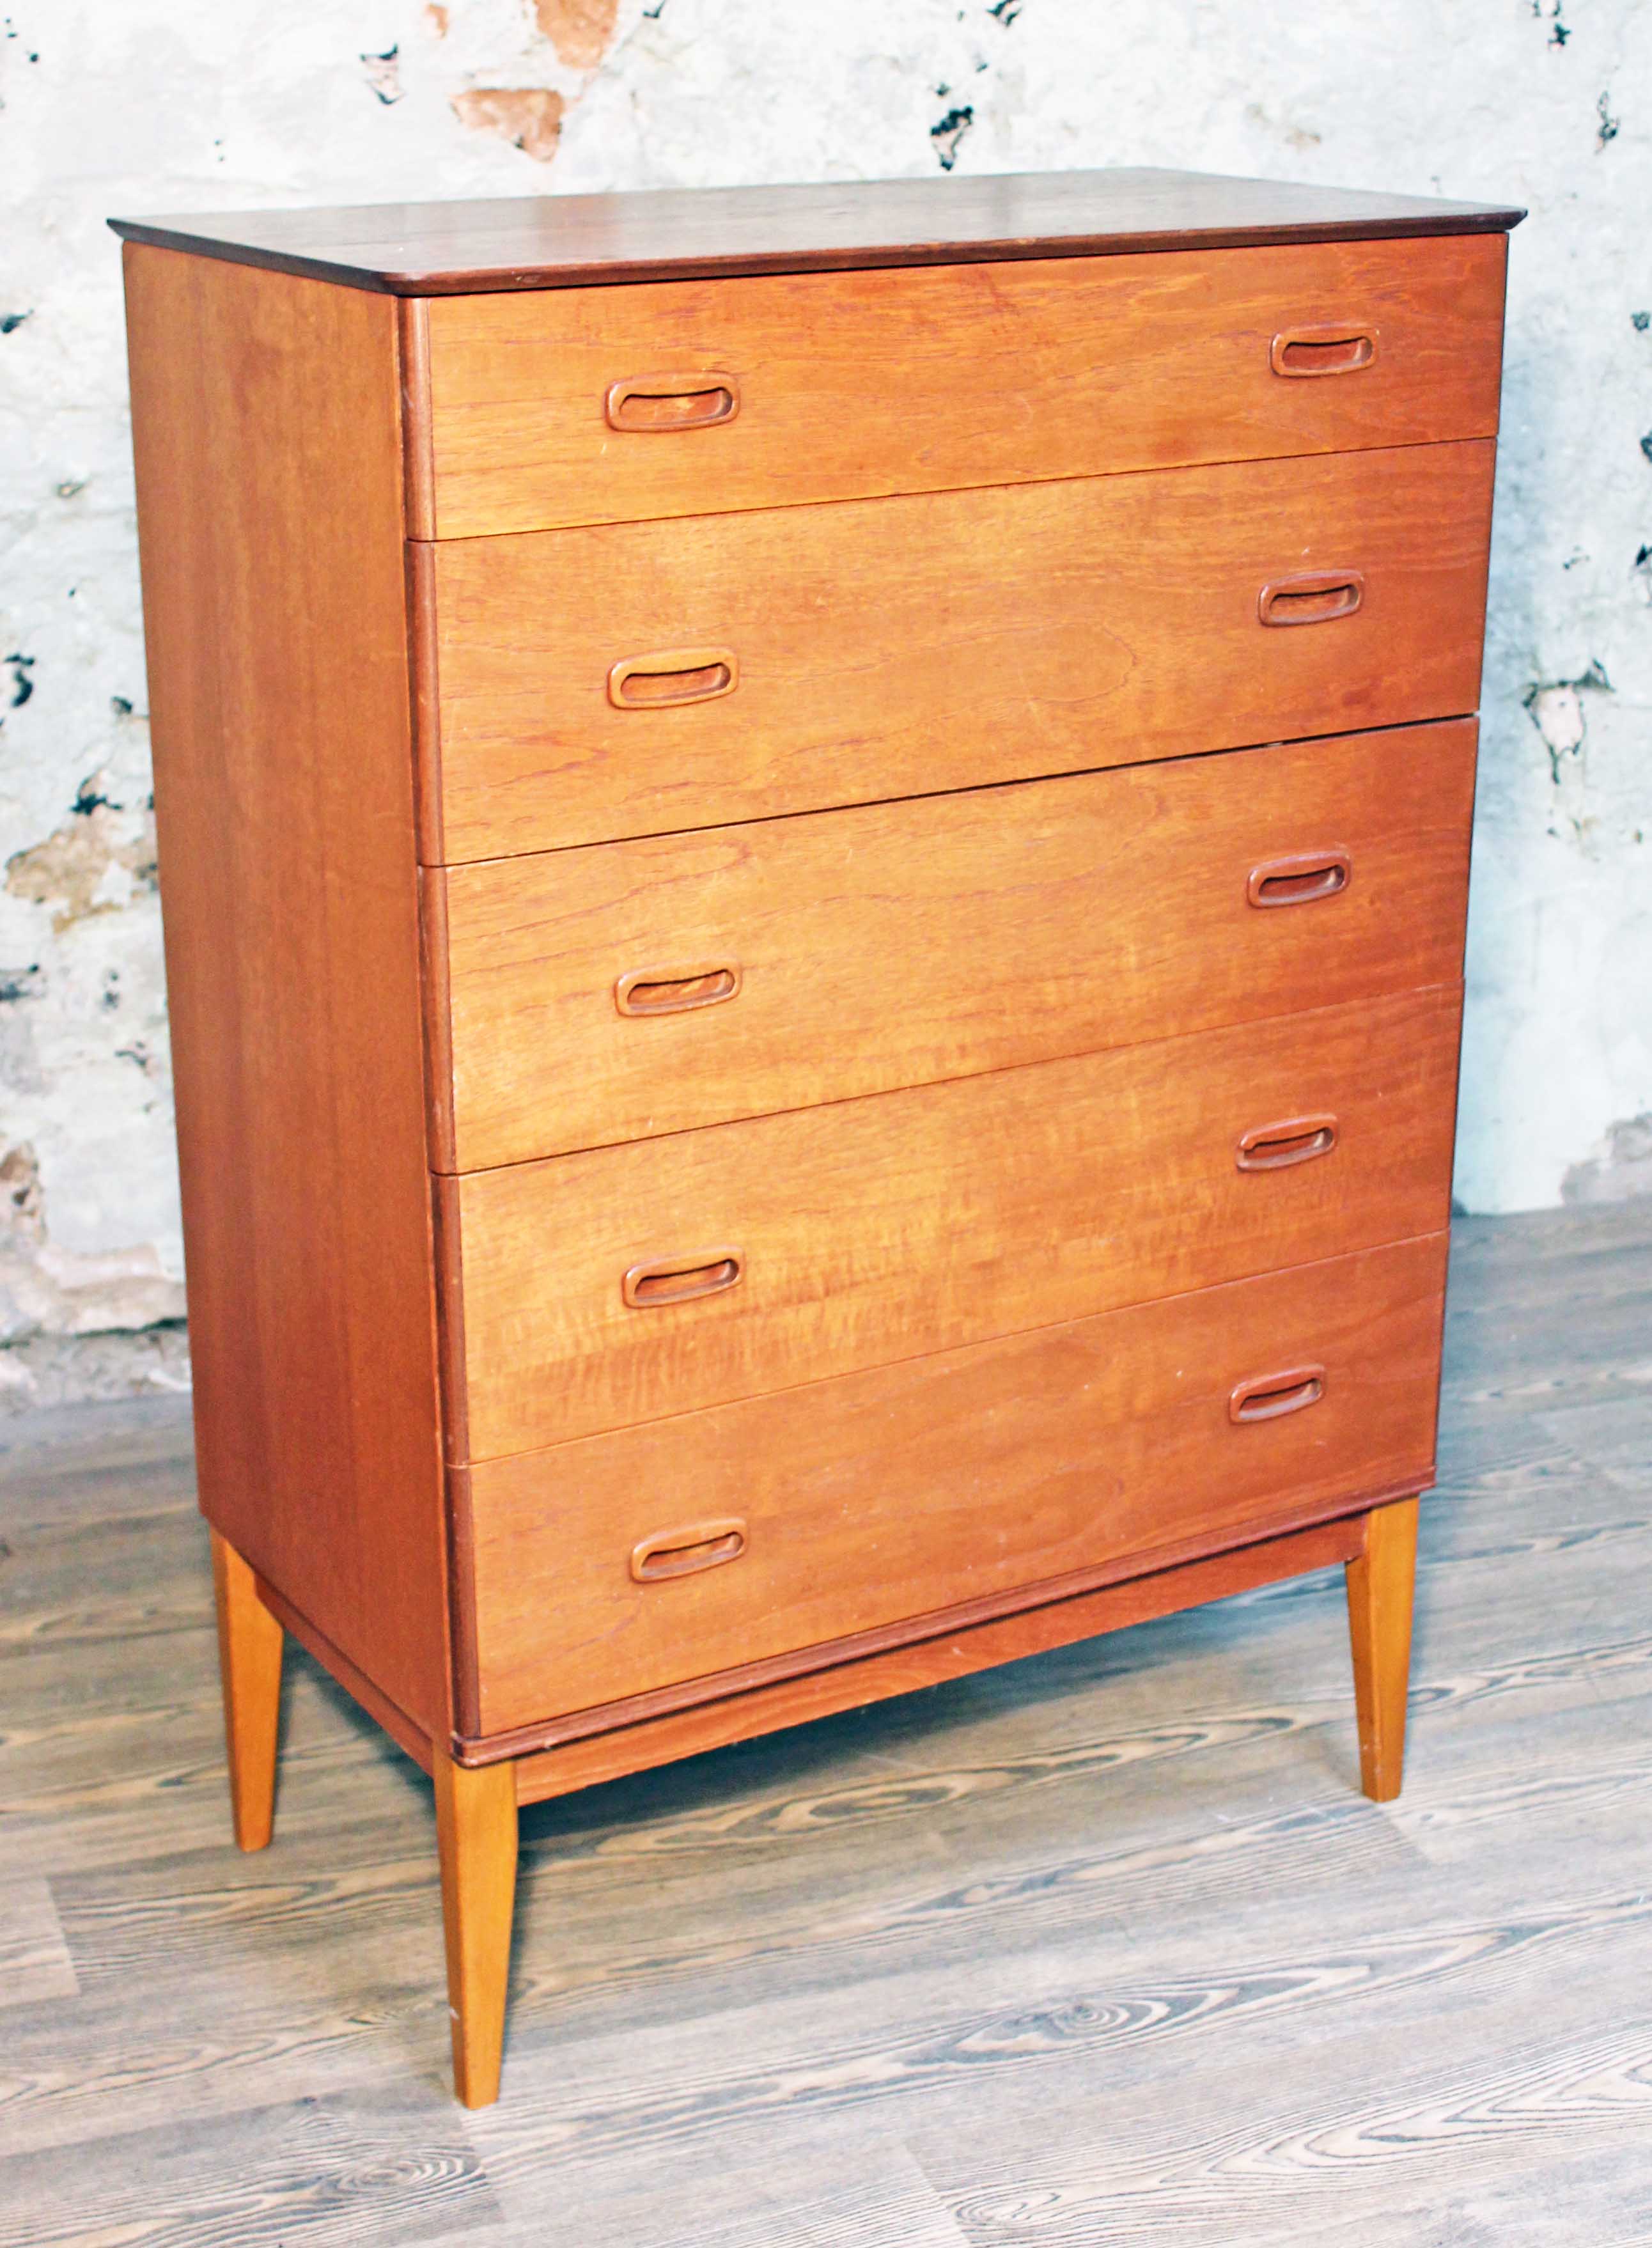 An Austinsuite teak chest of drawers, width 78cm, depth 42cm & height 112.5cm. Condition - a